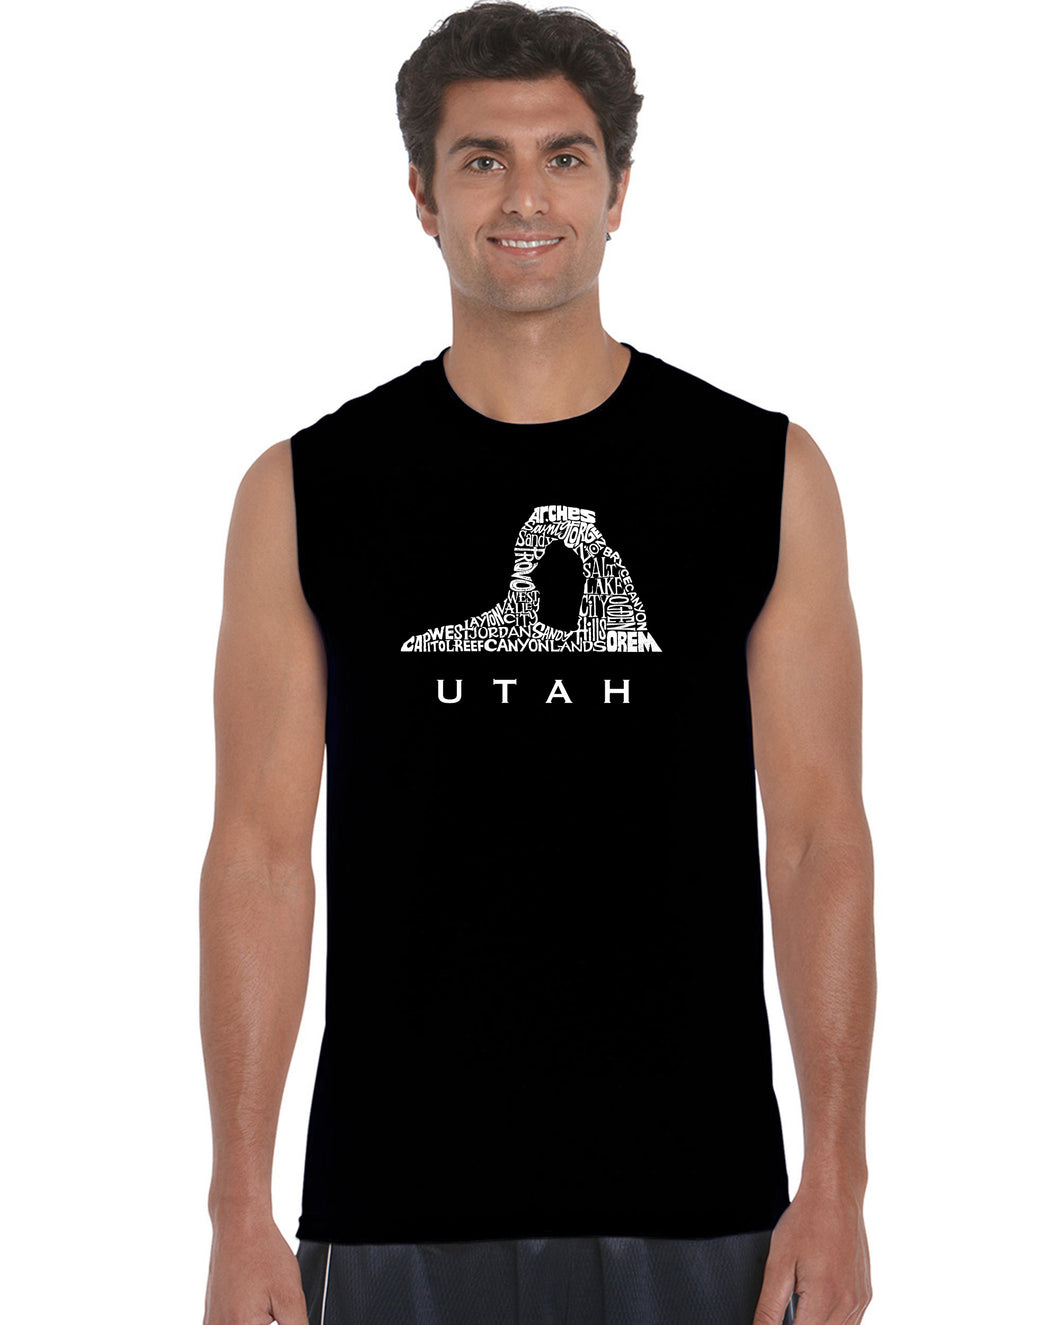 Utah - Men's Word Art Sleeveless T-Shirt